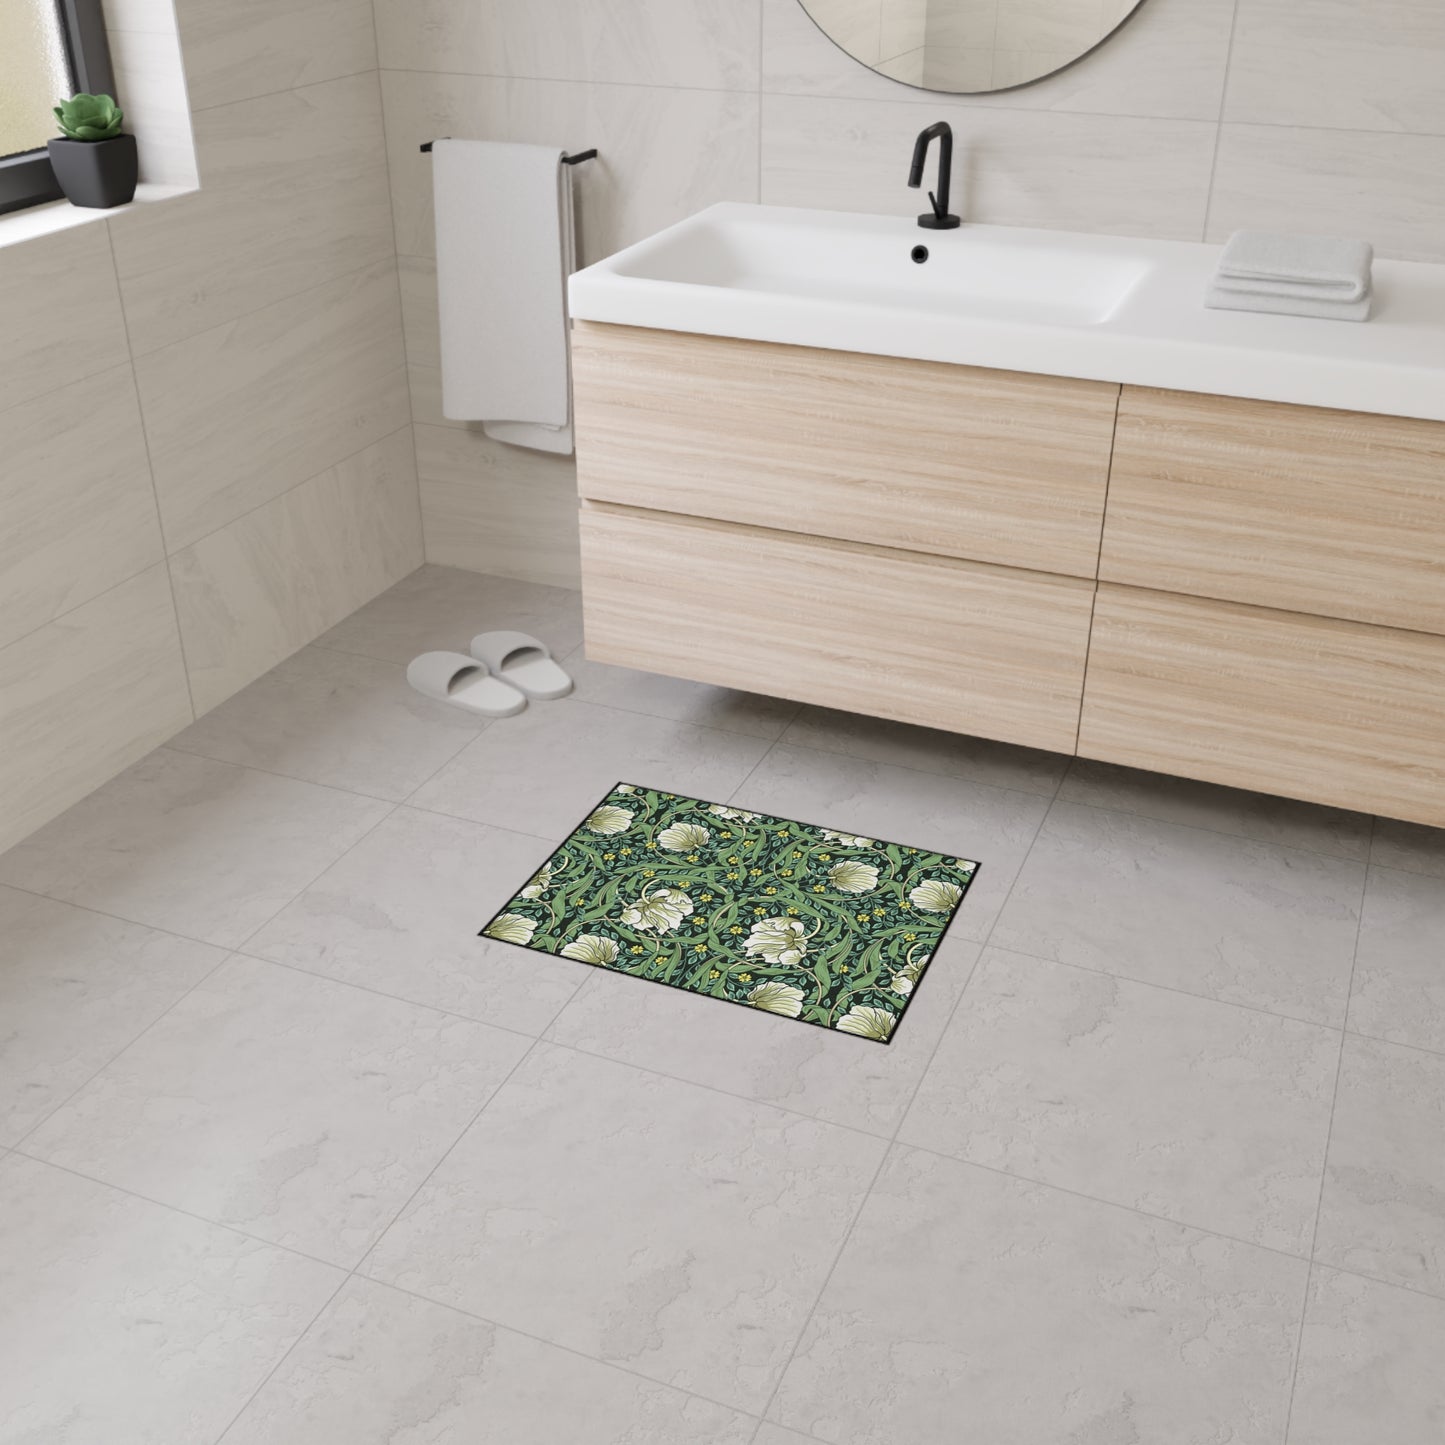 william-morris-co-heavy-duty-floor-mat-floor-mat-pimpernel-collection-green-20